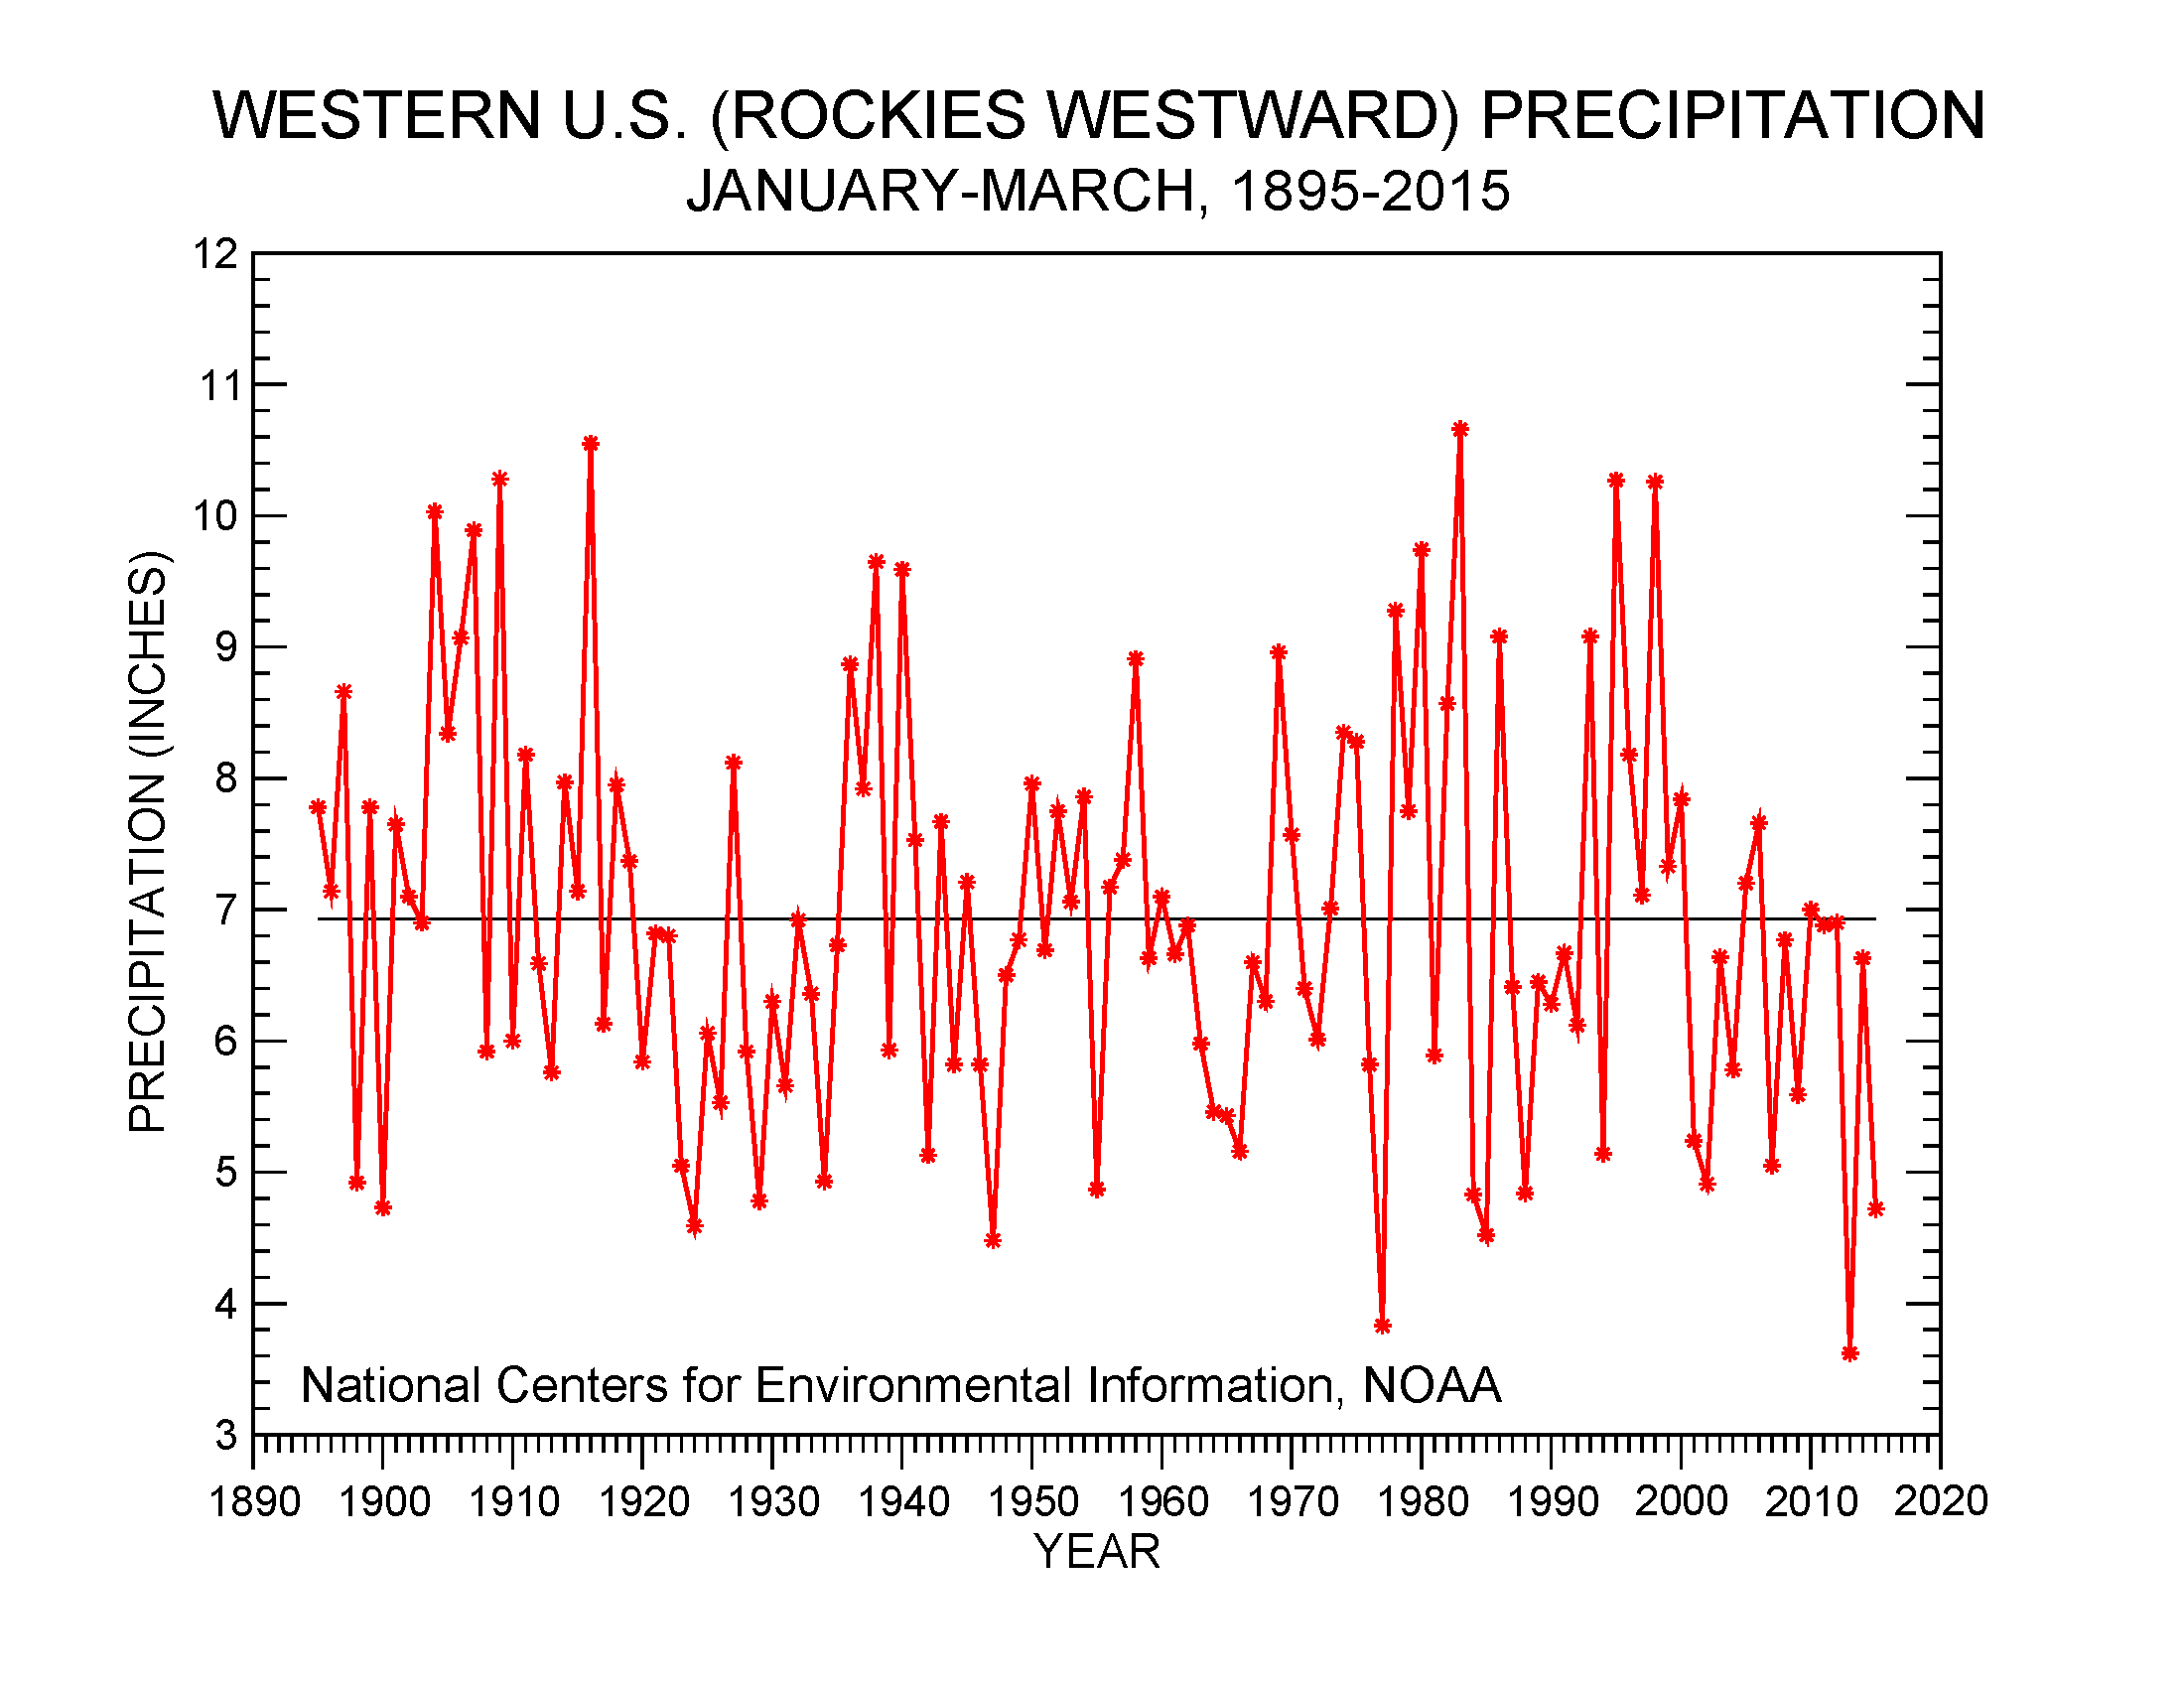 Western U.S. precipitation, January-March, 1895-2015